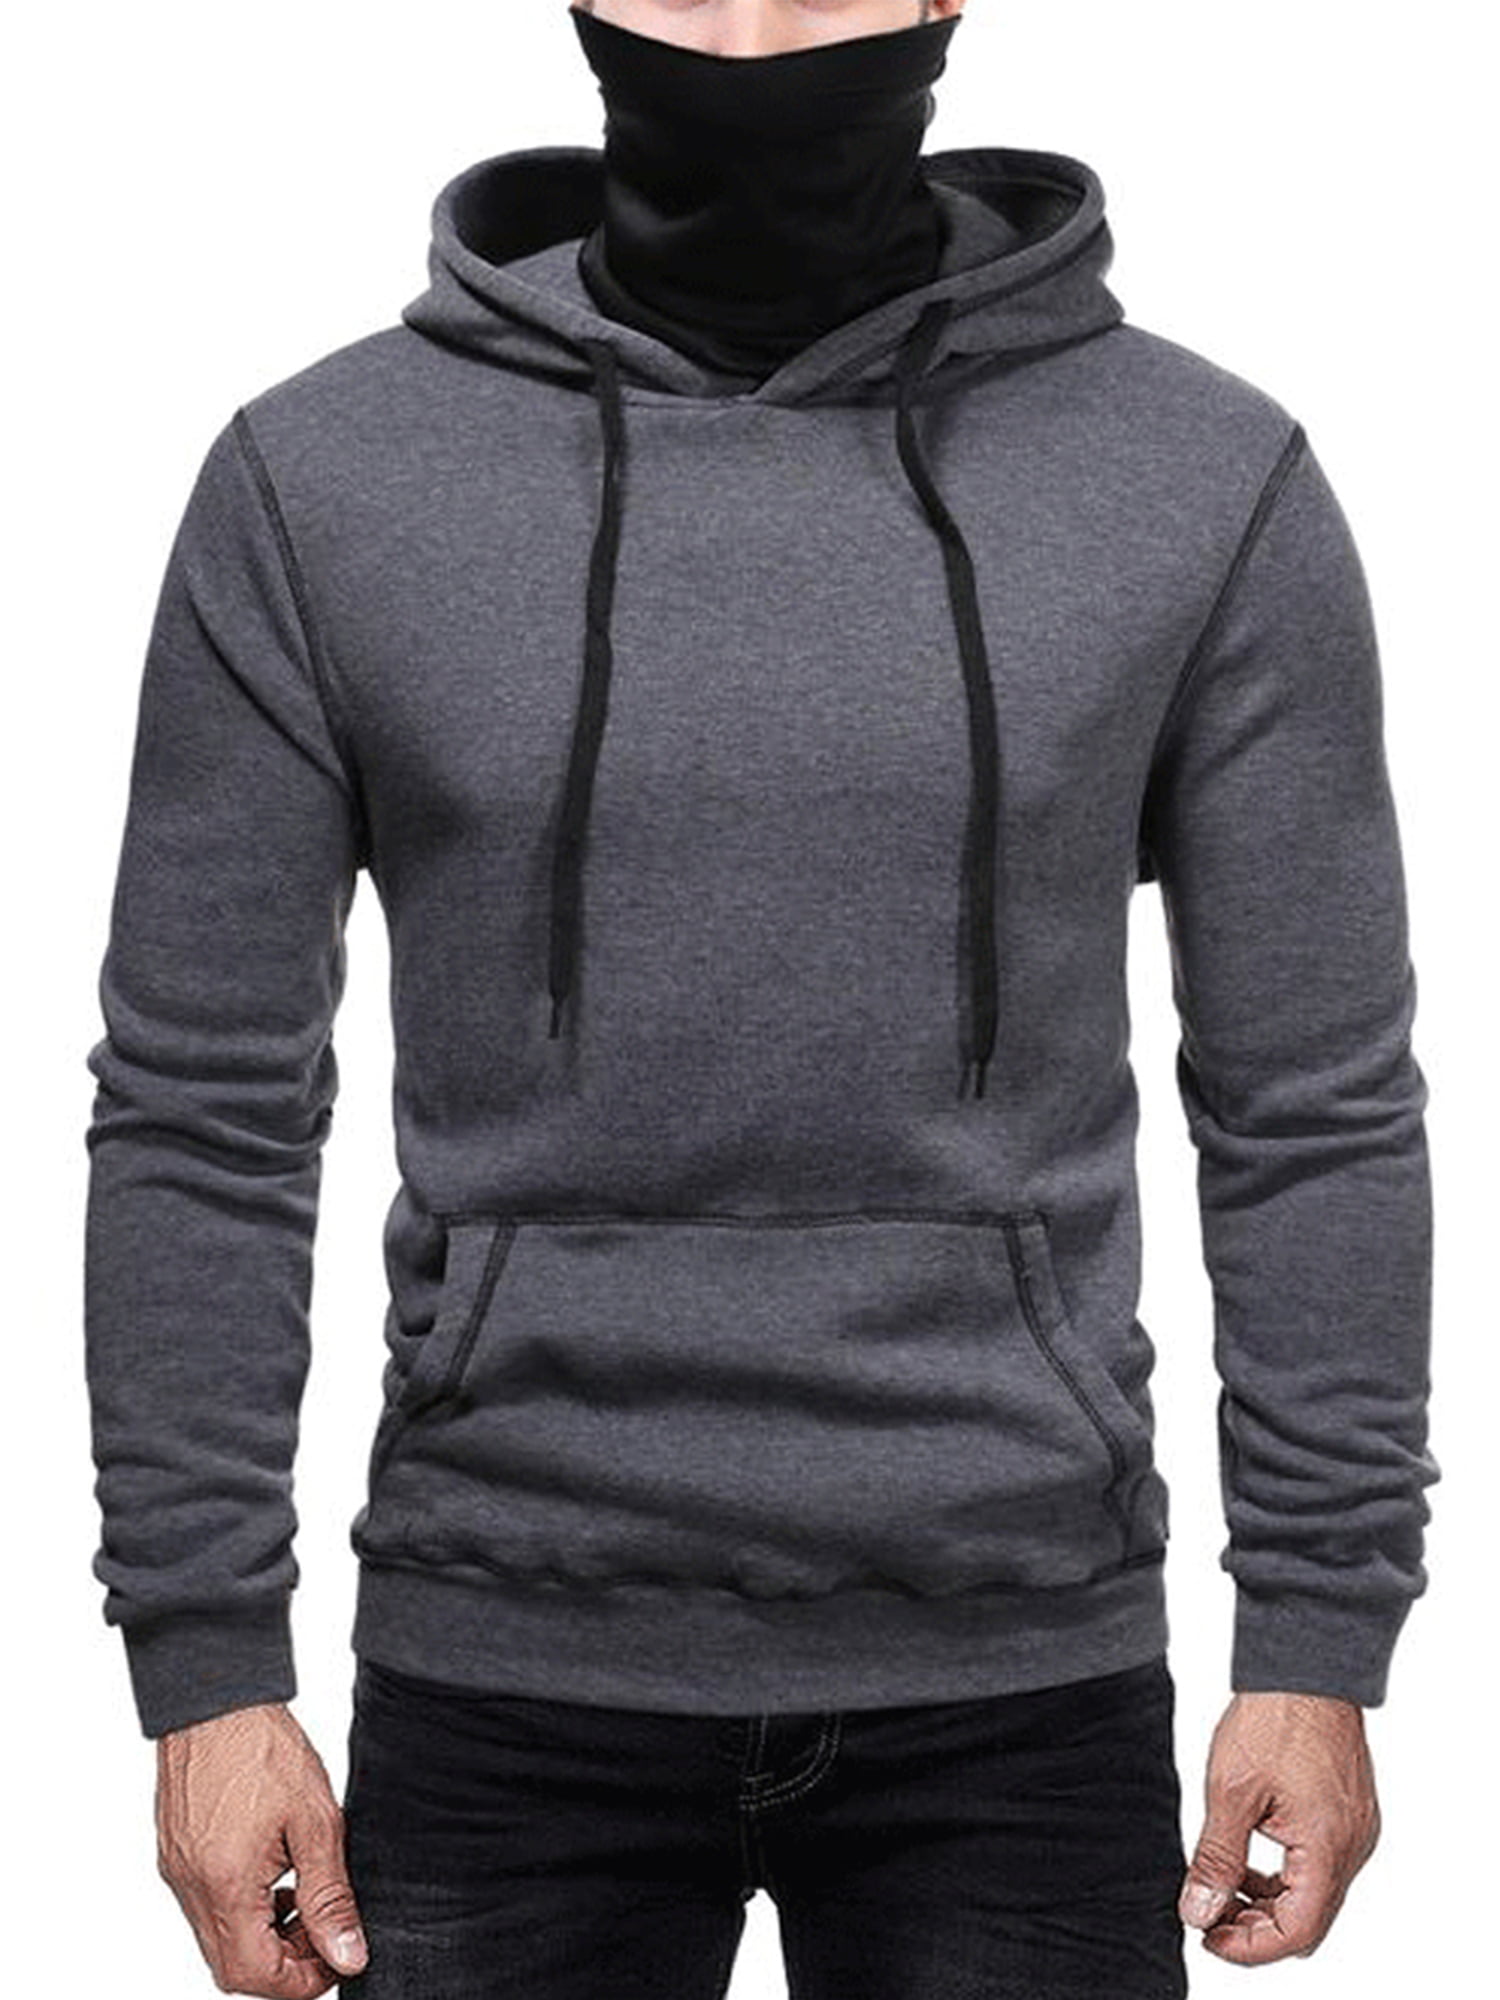 Mens Running Pullover Hoodies Workout Fleece Hooded Sweatshirt with Kangaroo Pocket 